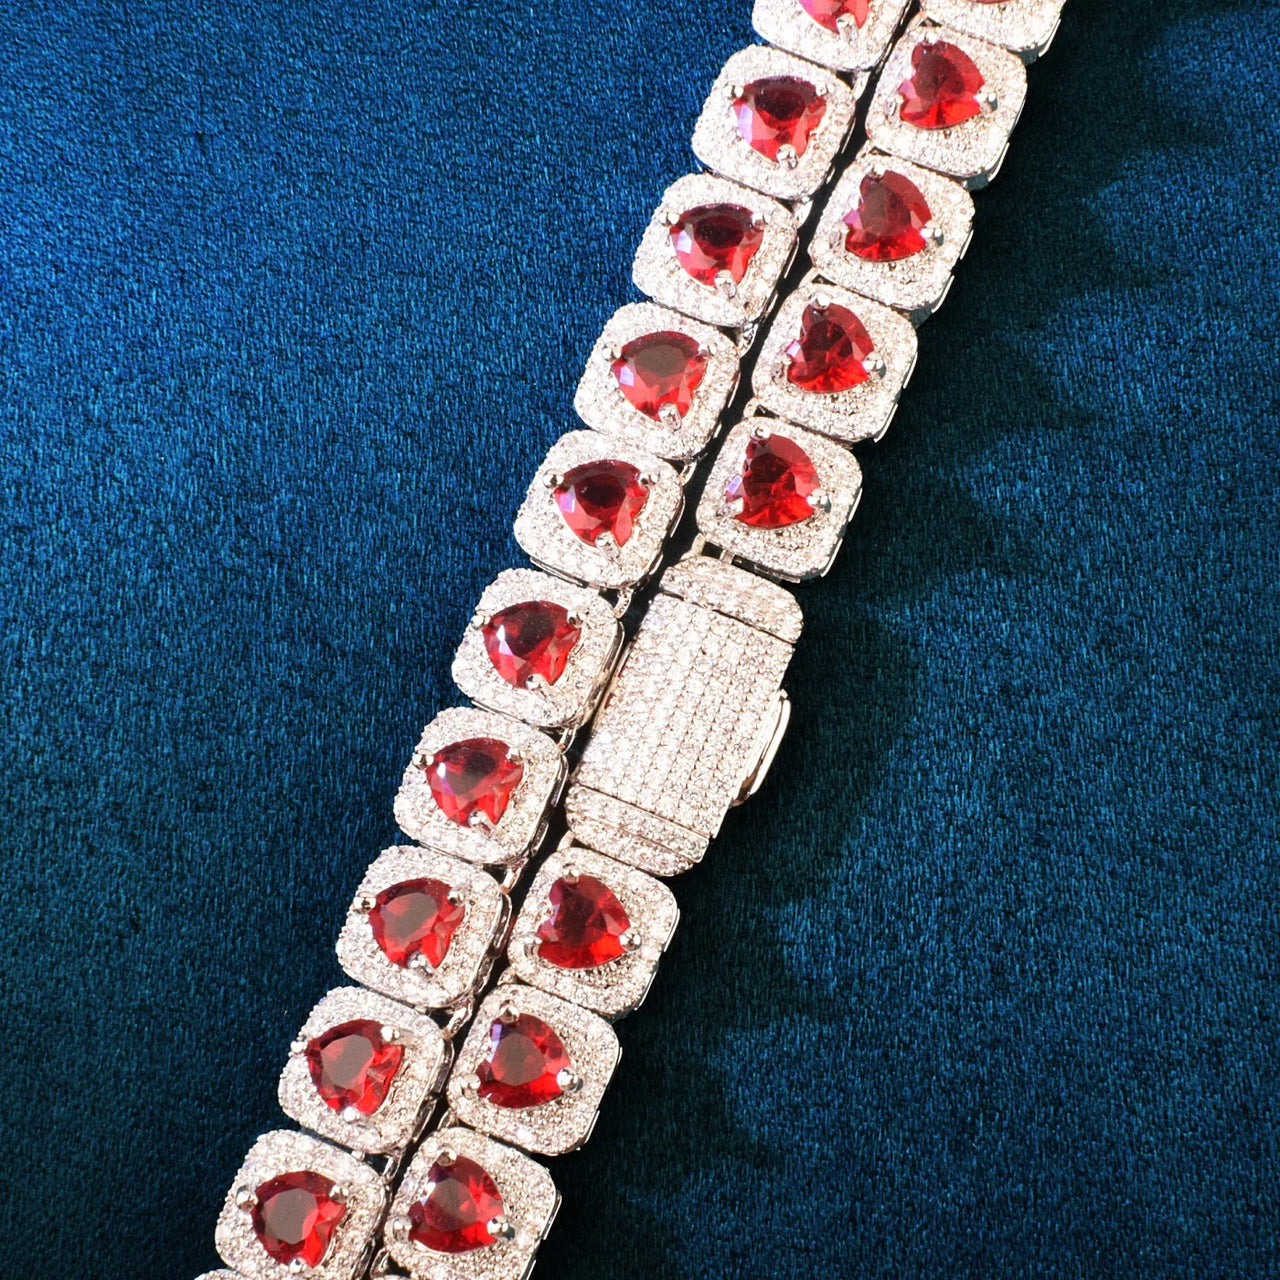 9mm Heart Clustered Tennis Bracelet - Different Drips